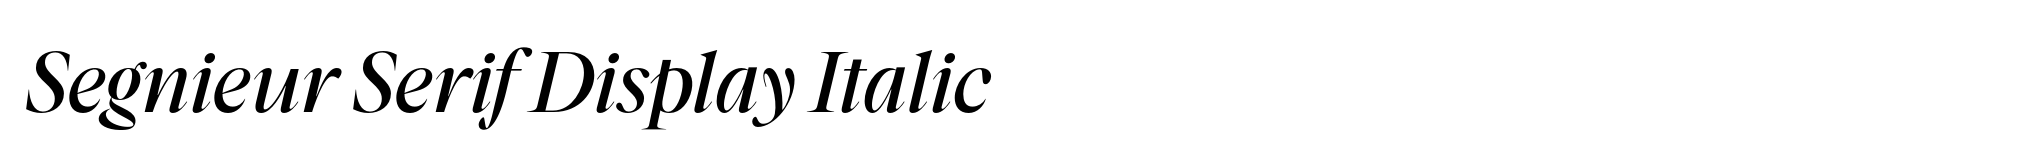 Segnieur Serif Display Italic image